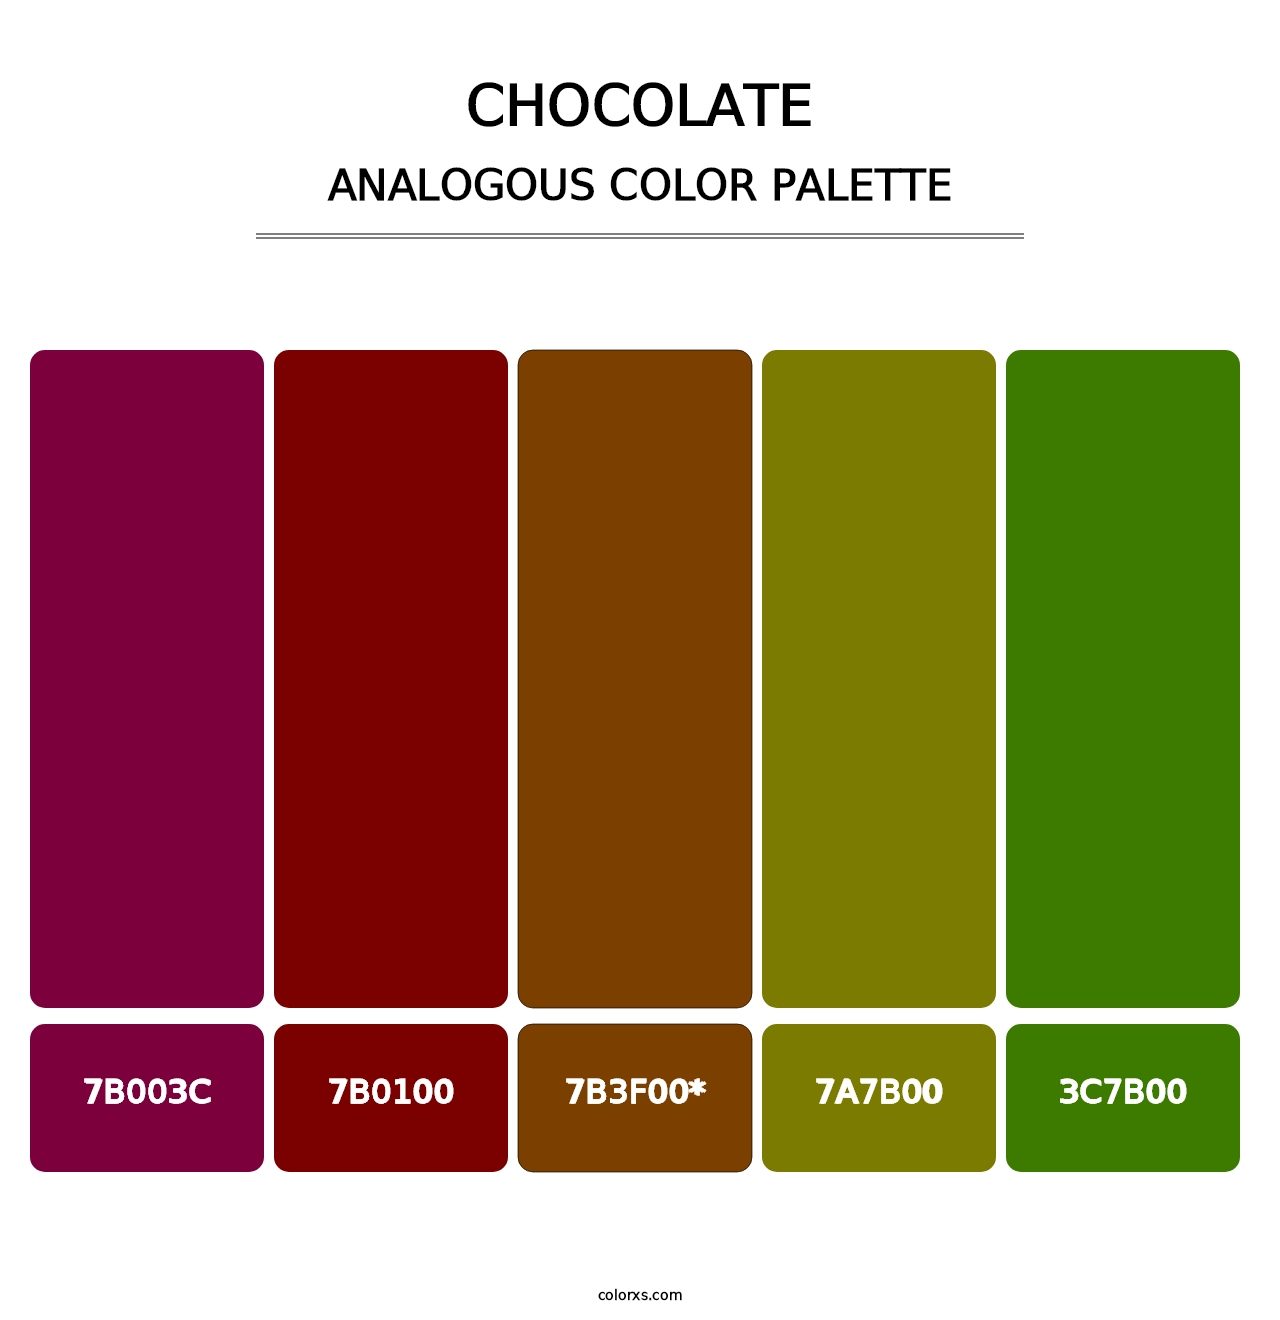 Chocolate - Analogous Color Palette